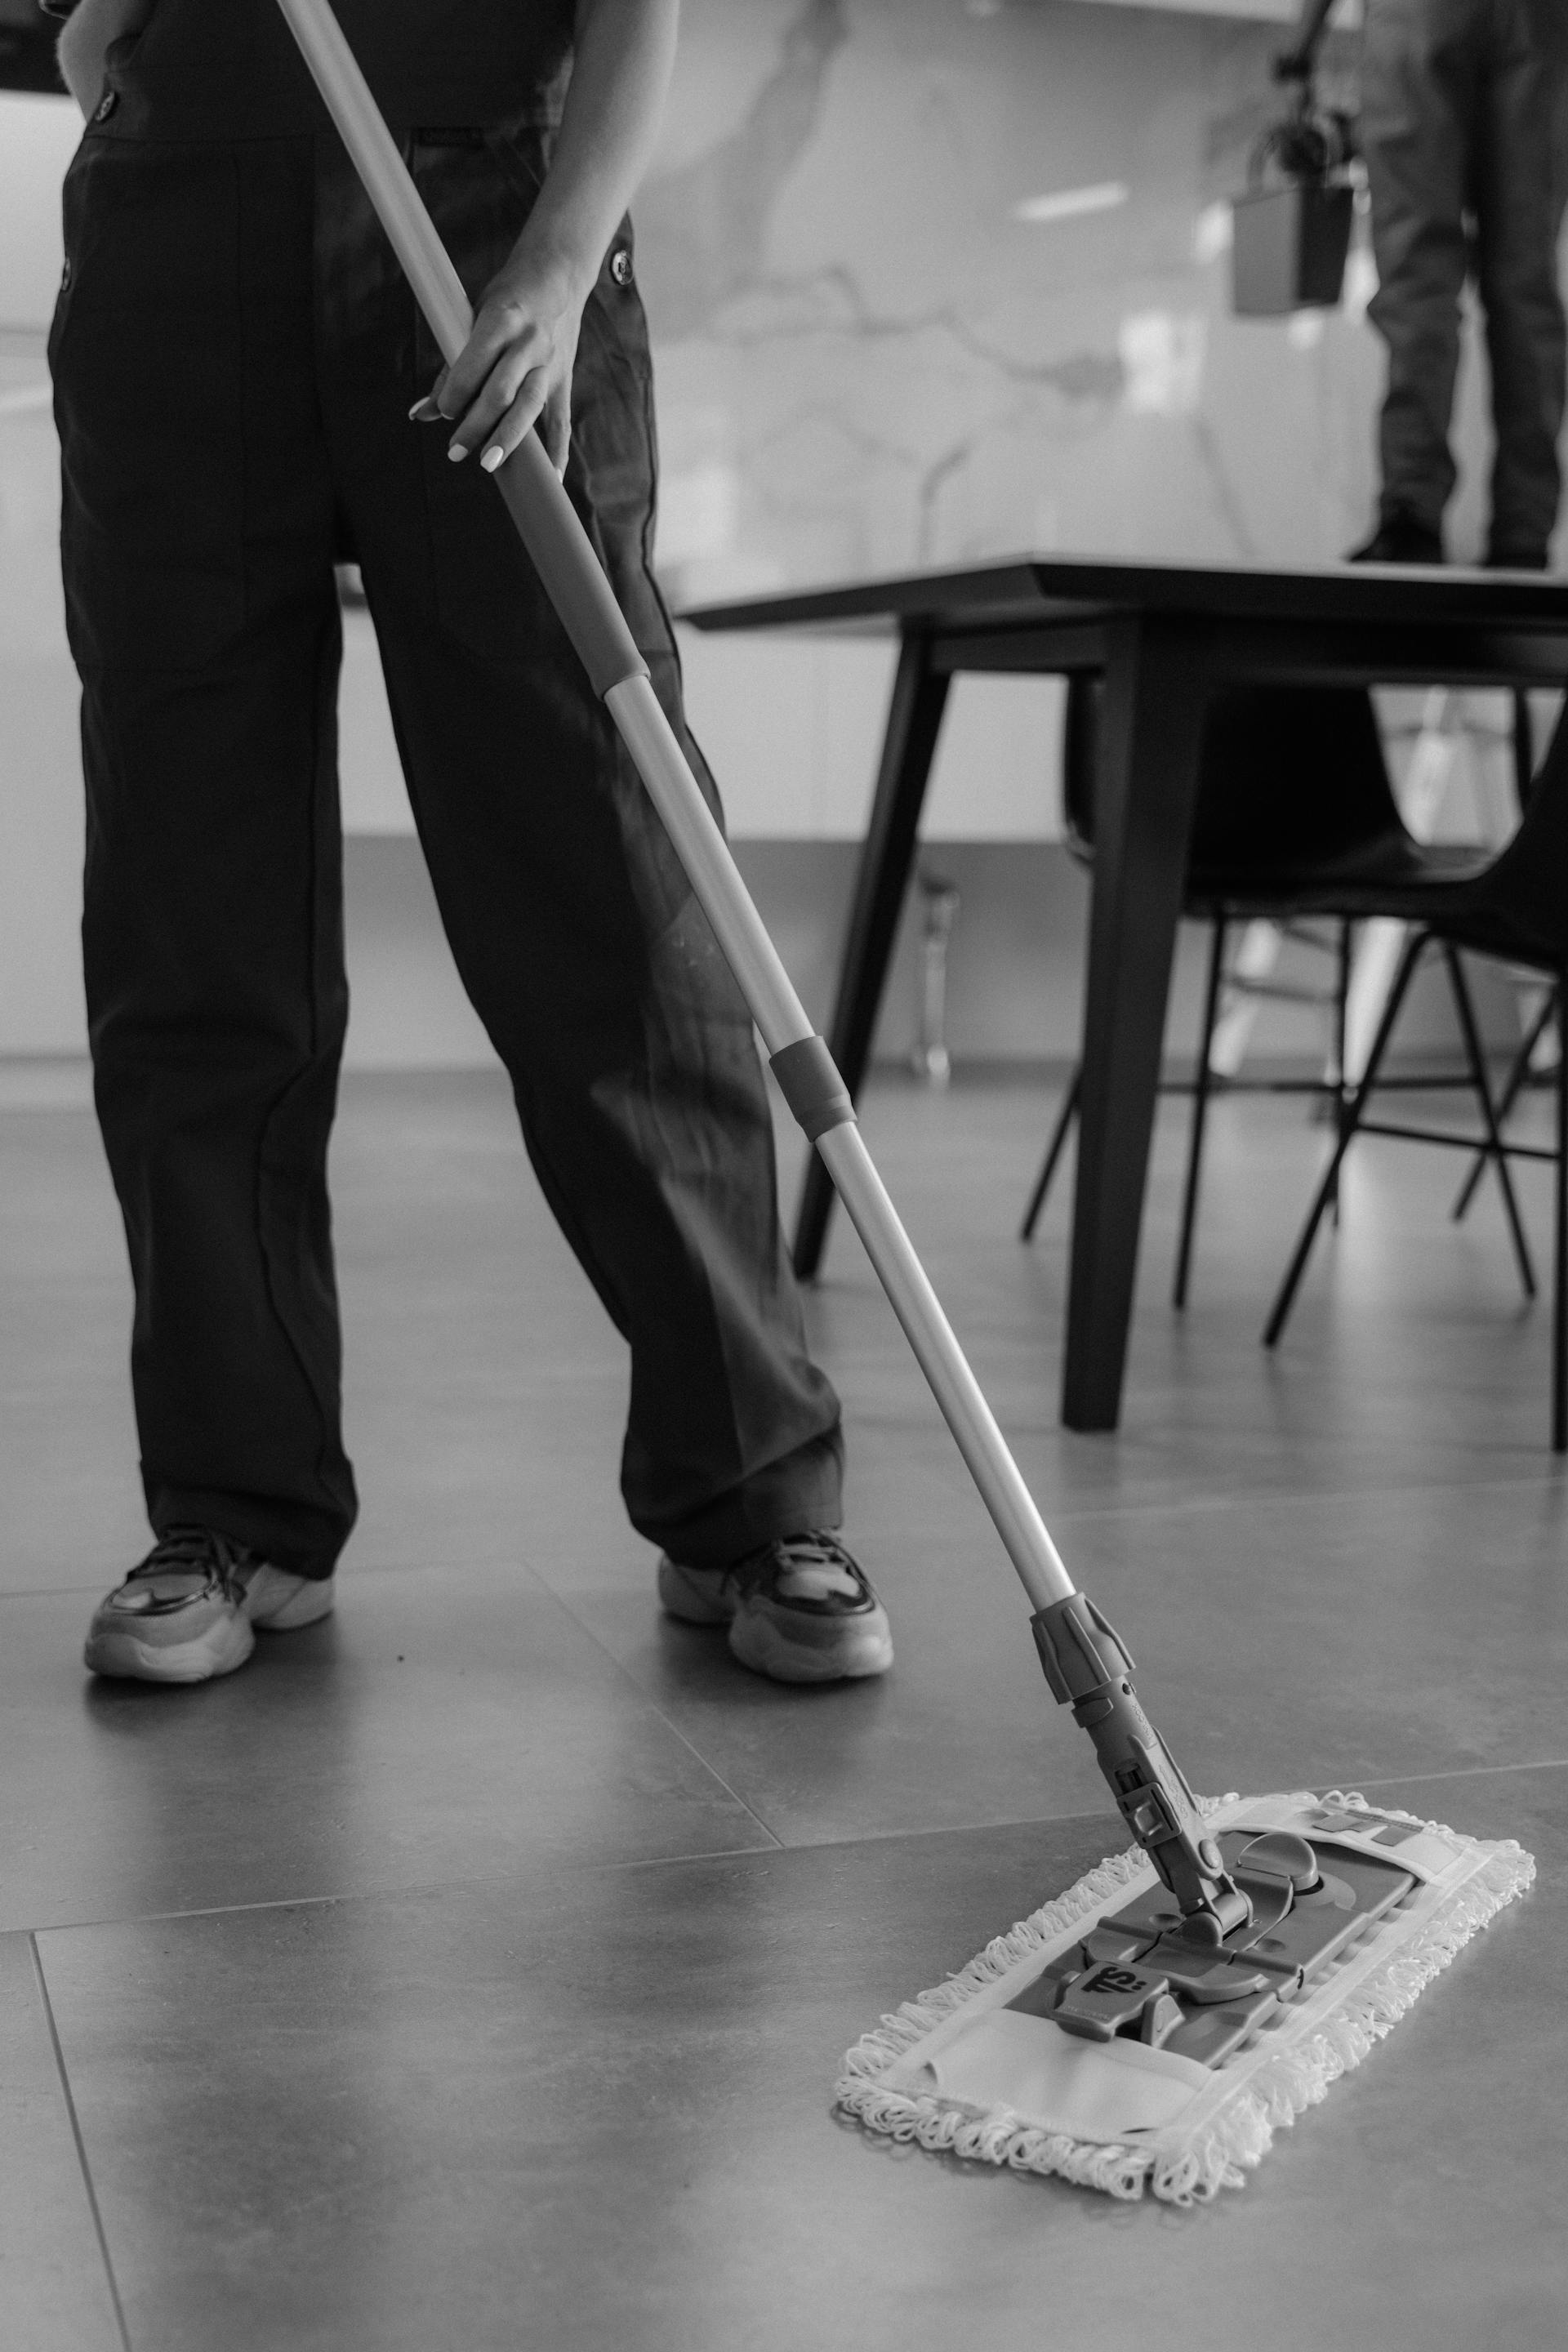 A person using a mop | Source: Pexels